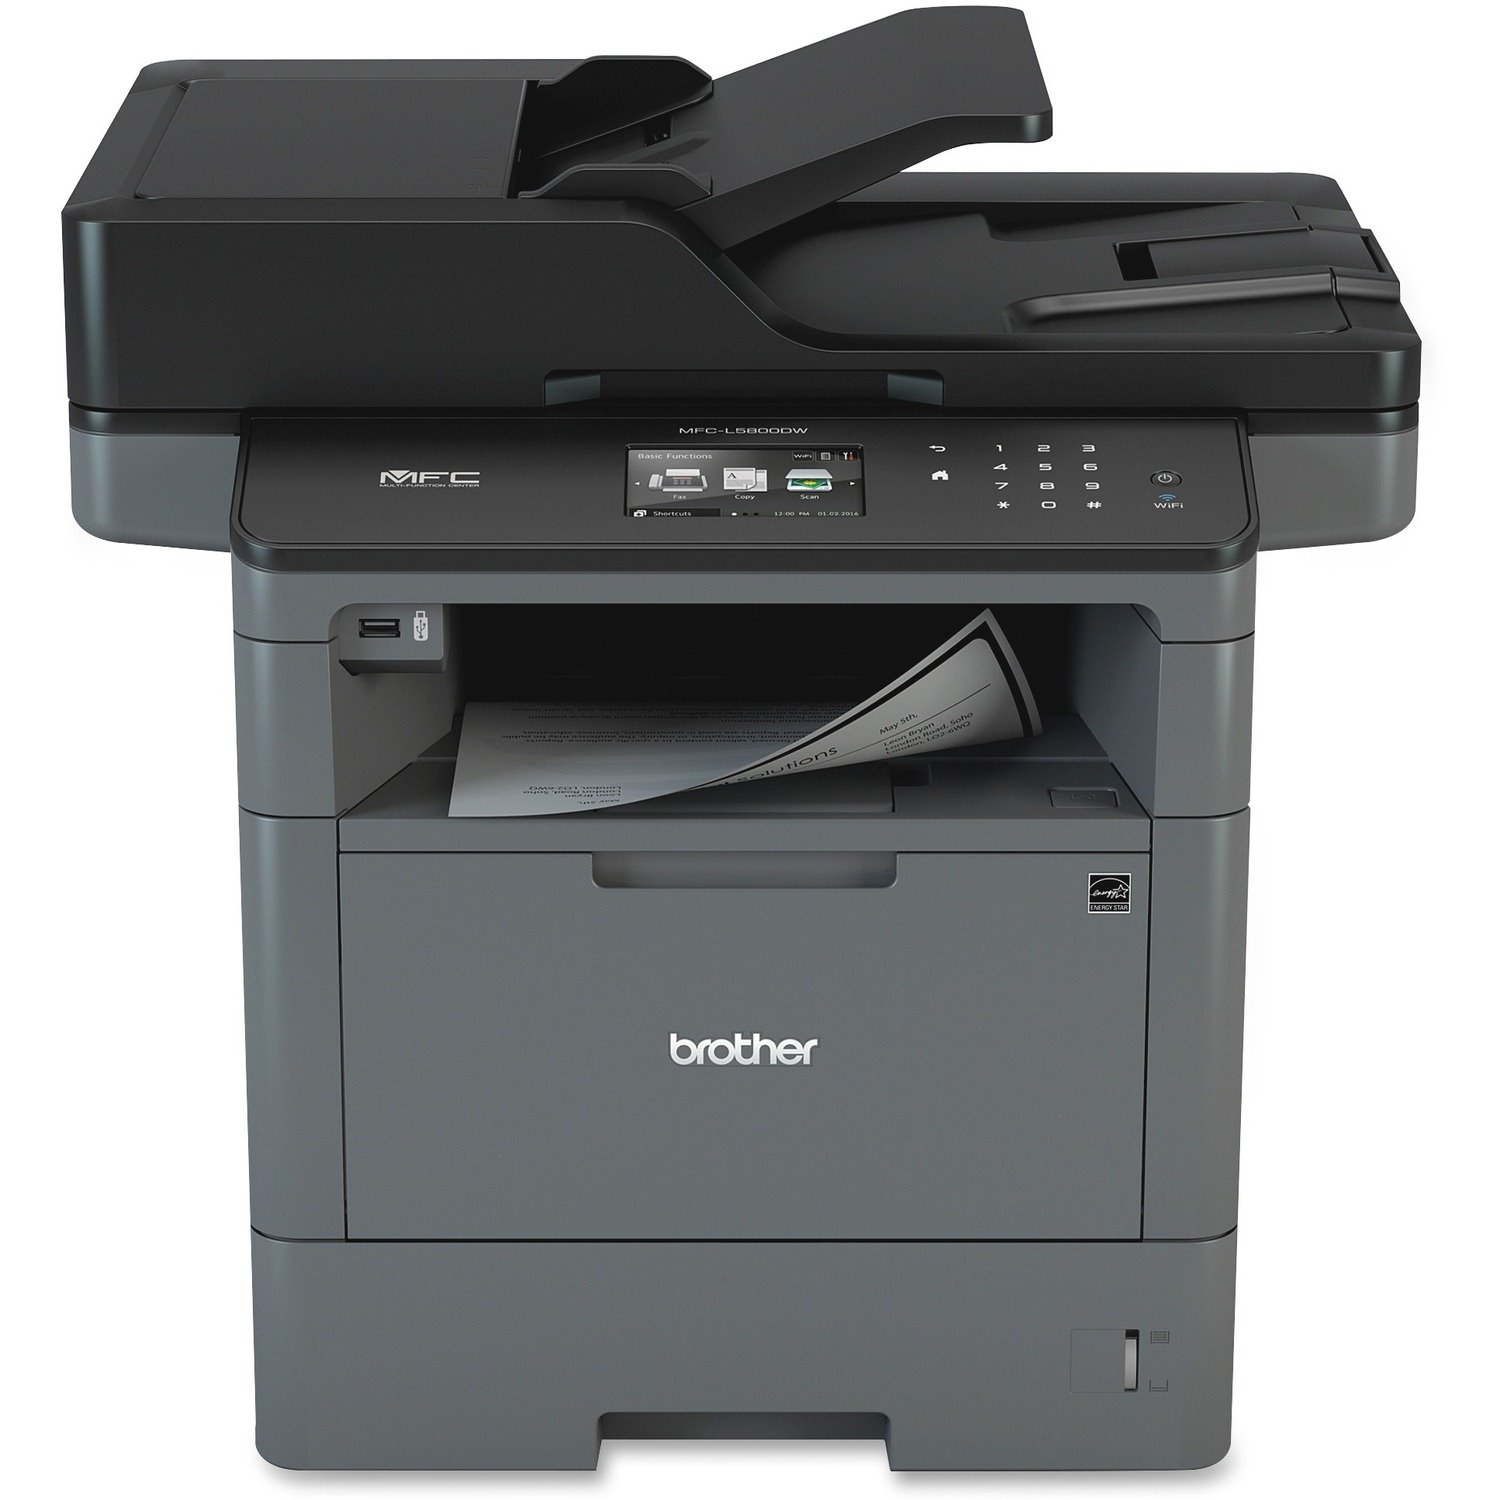 Brother MFC-L5800DW Laser Multifunction Printer - Monochrome - Duplex